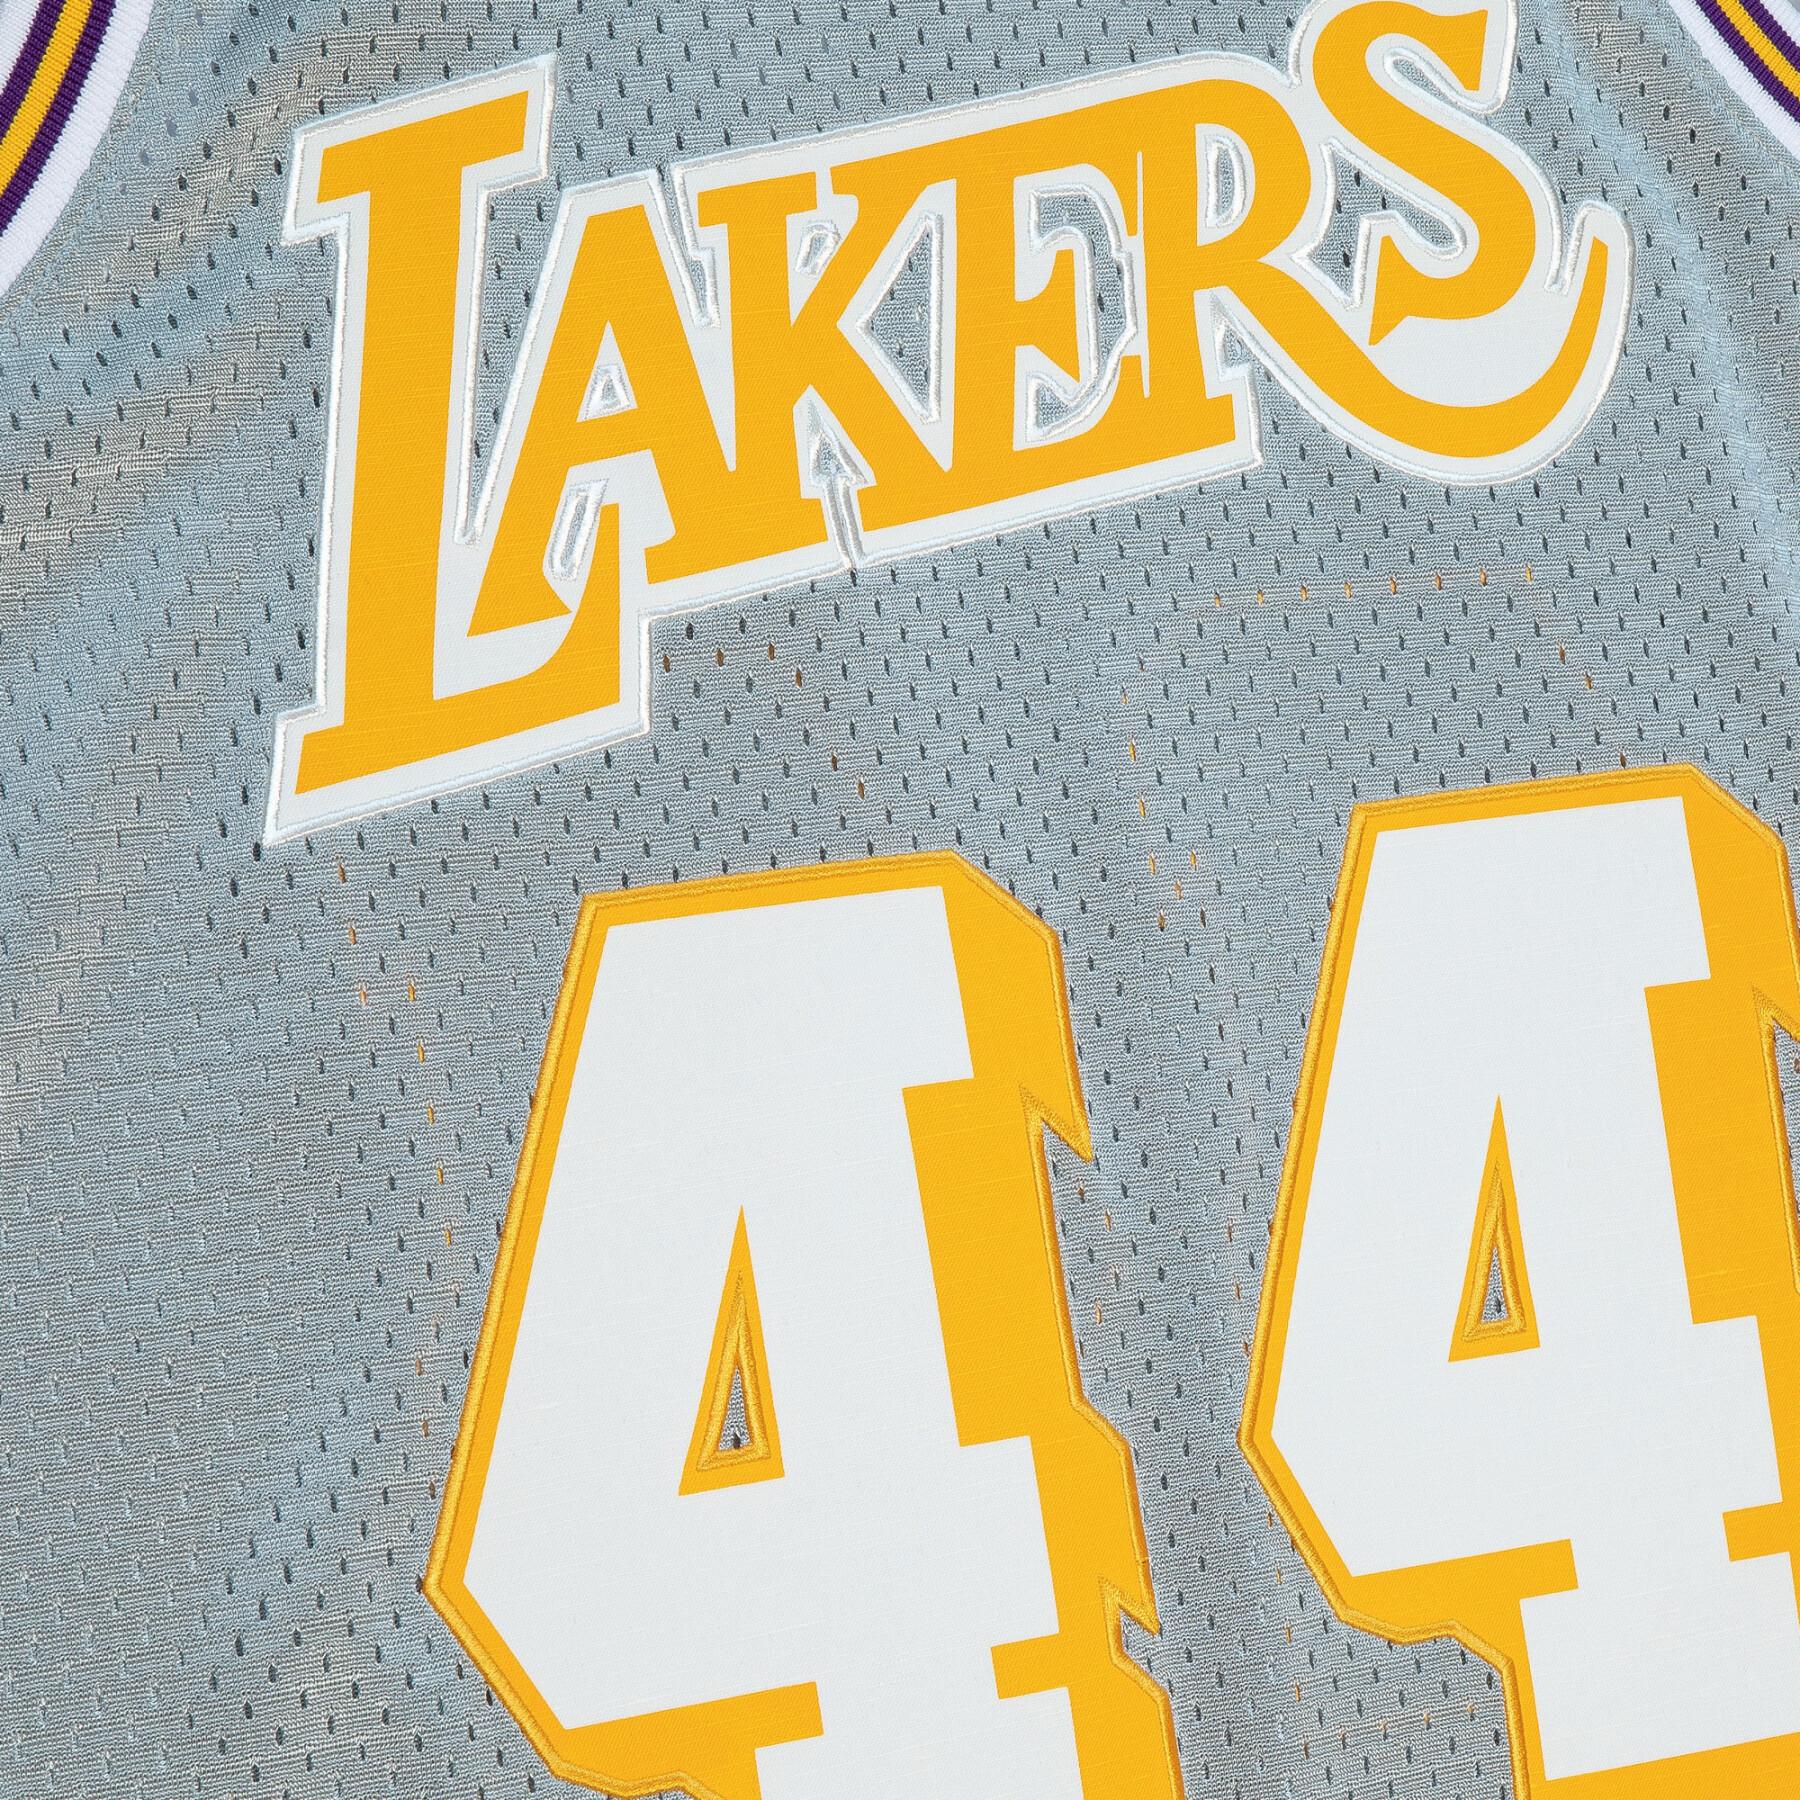 CamisetaLos Angeles Lakers 75th NBA 1971